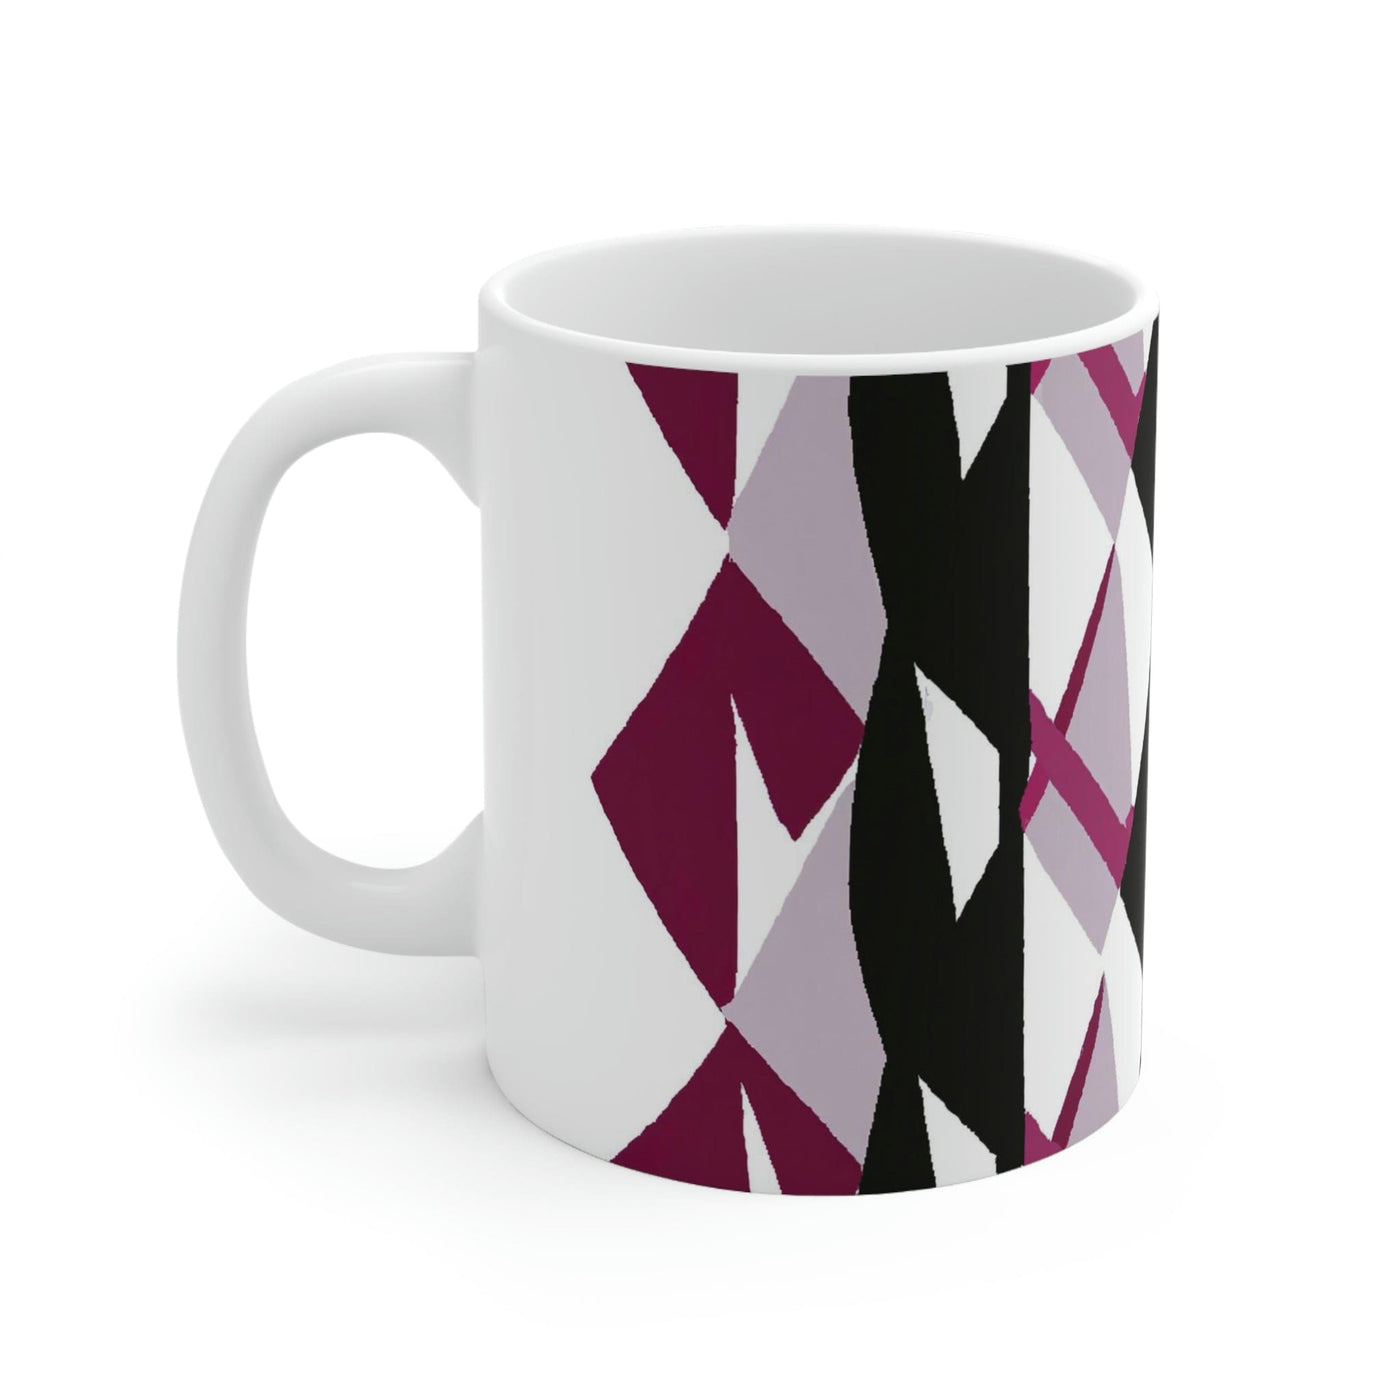 Decorative Ceramic Coffee Mug 15oz Mauve Pink And Black Geometric Pattern